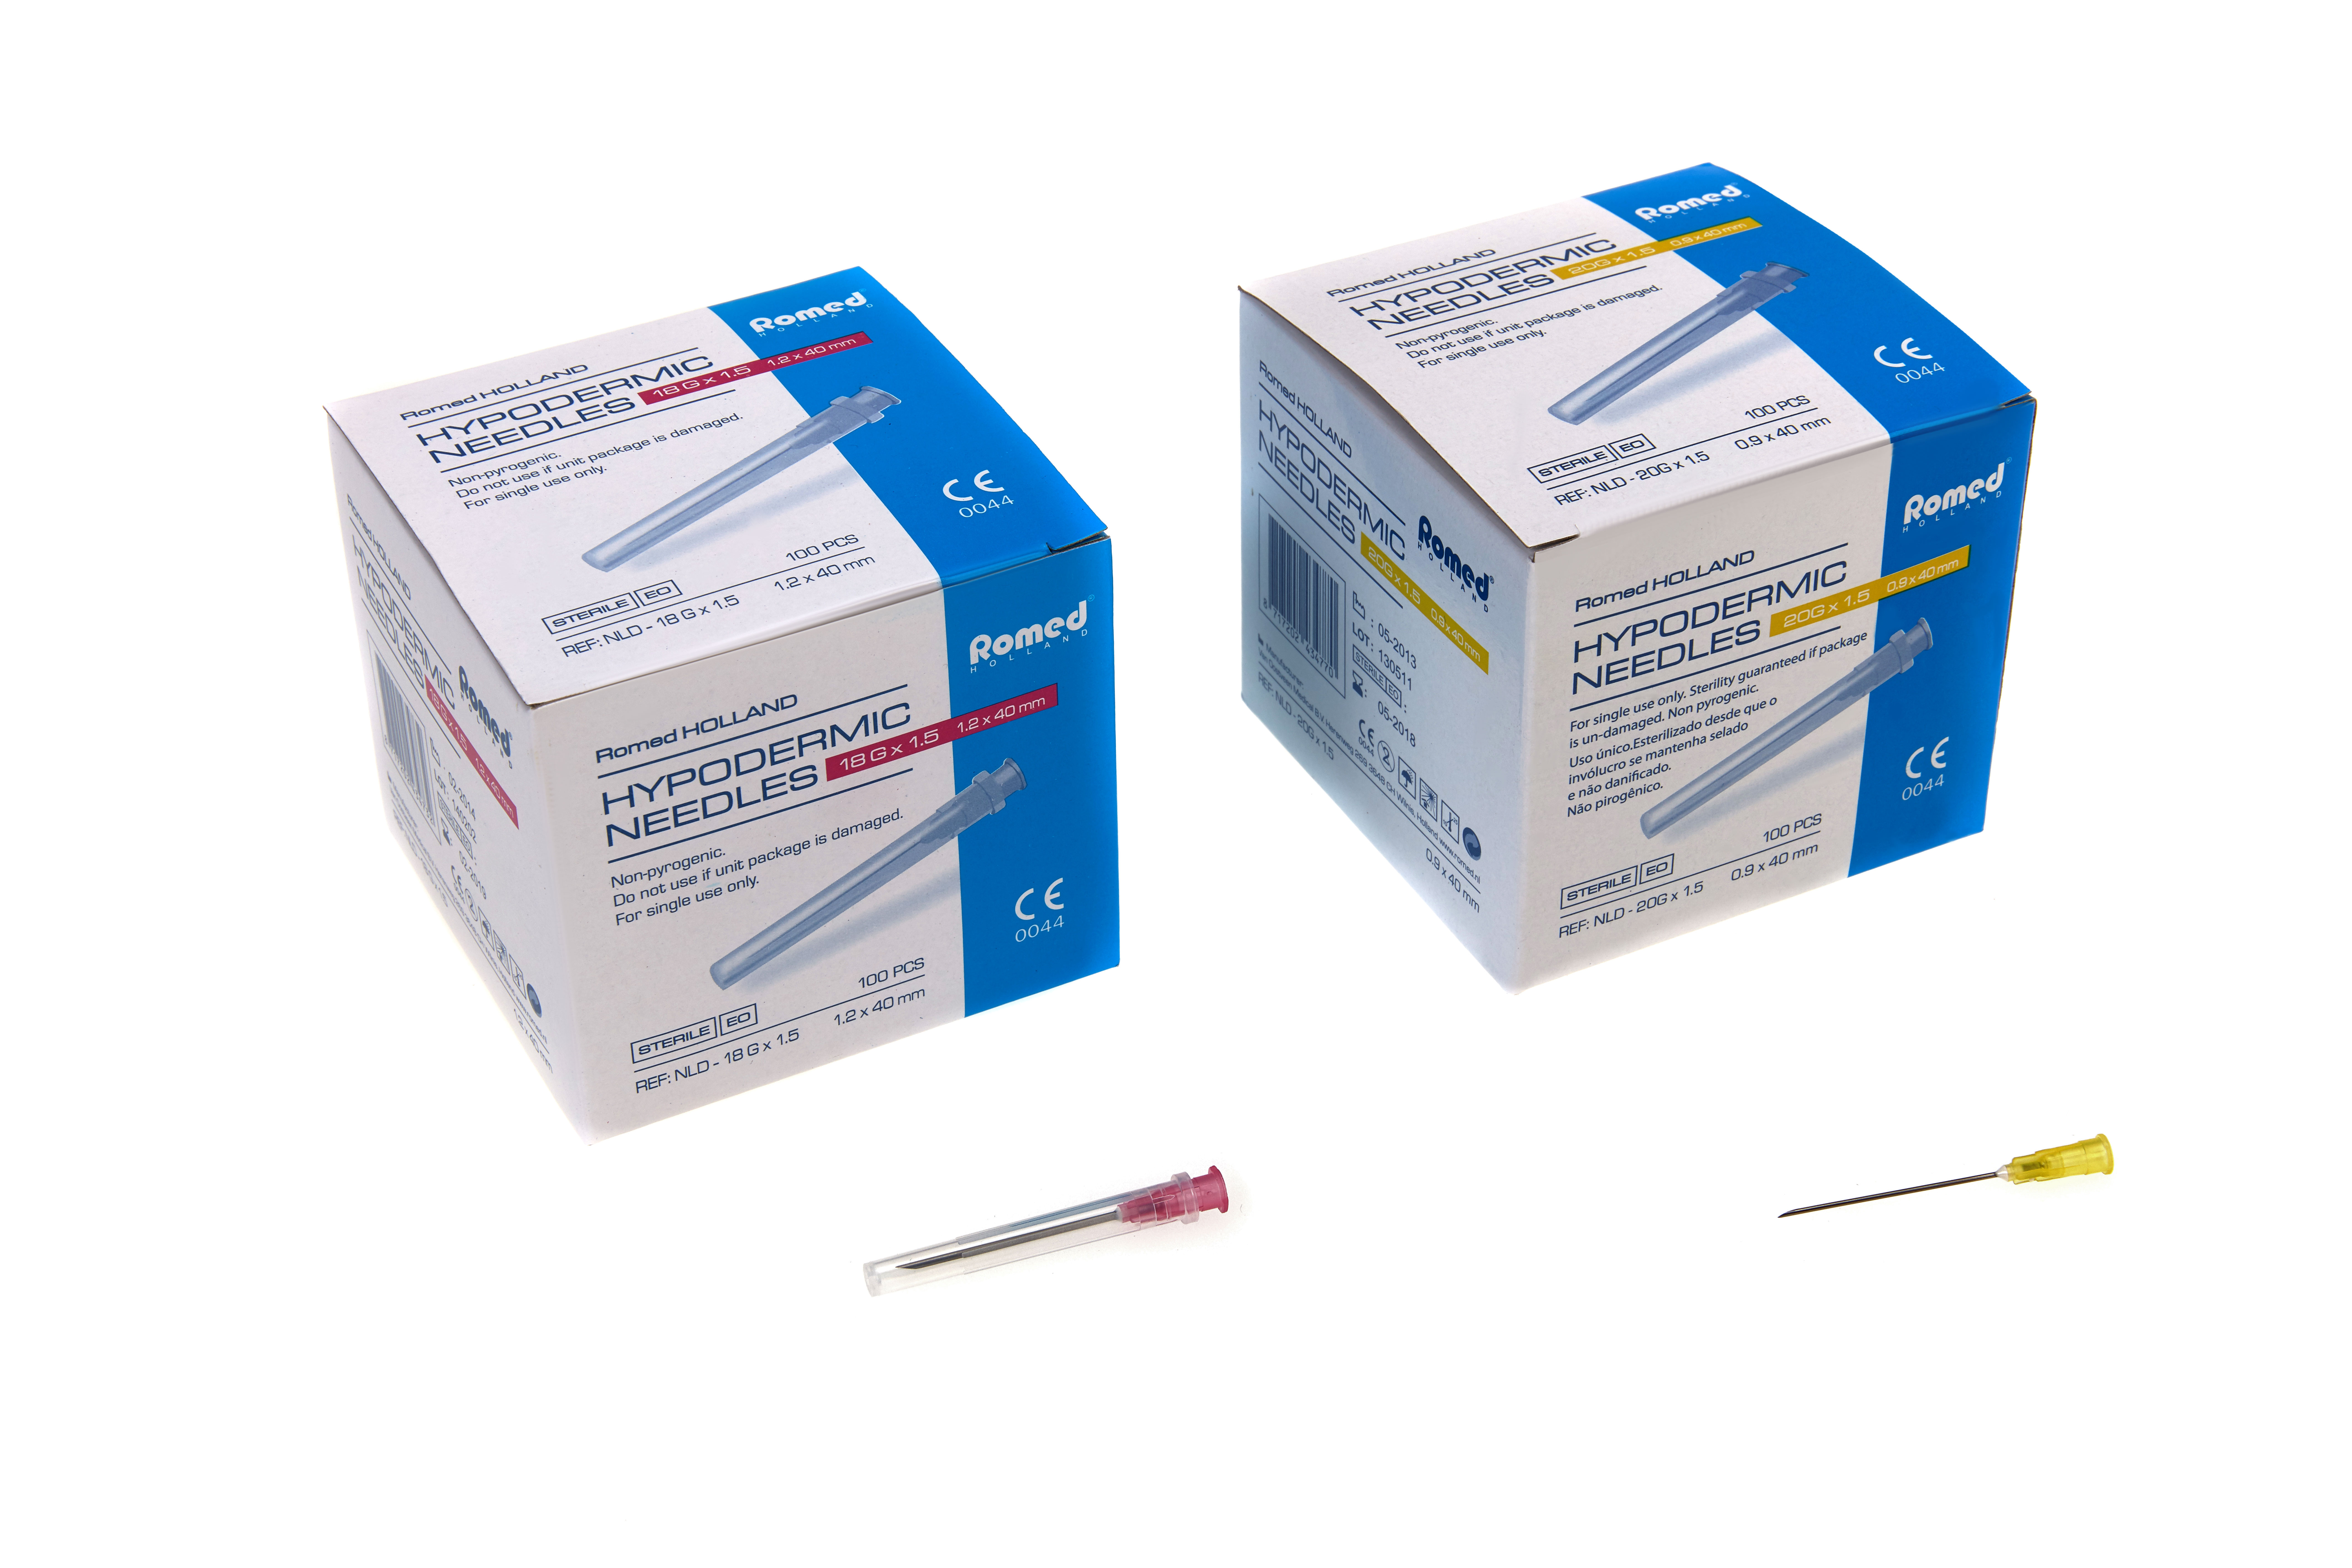 NLD-19GX1.5 Romed hypodermic needles, 19gx1.5", sterile per piece, 100 pcs in an inner box, 50 x 100 pcs = 5.000 pcs in a carton.